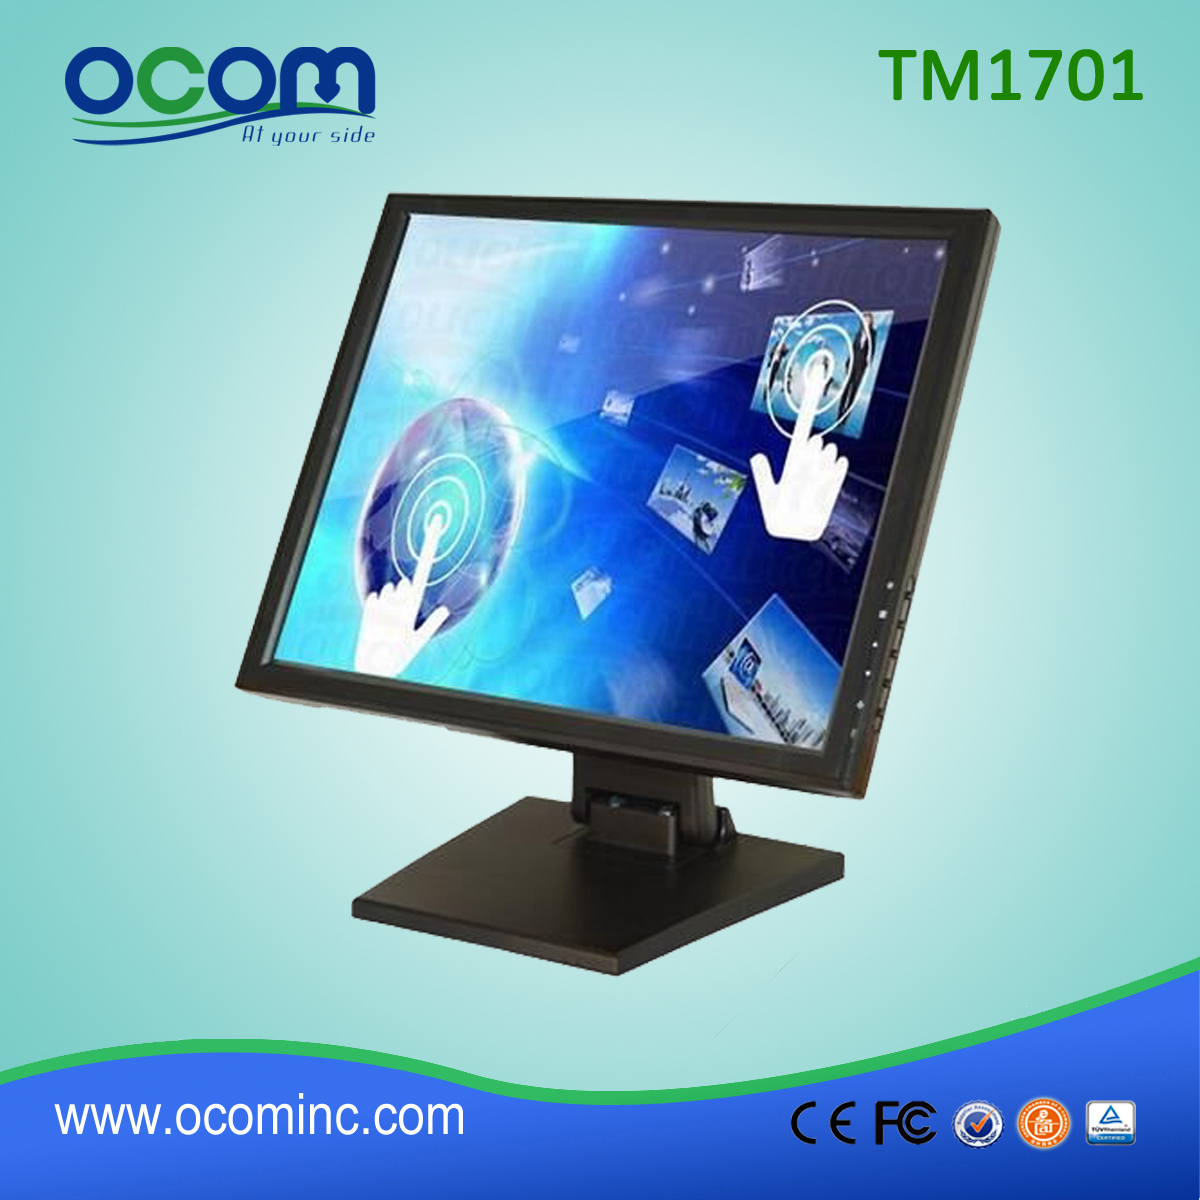 Schermo TM1701 flessibile sistema POS touch LCD